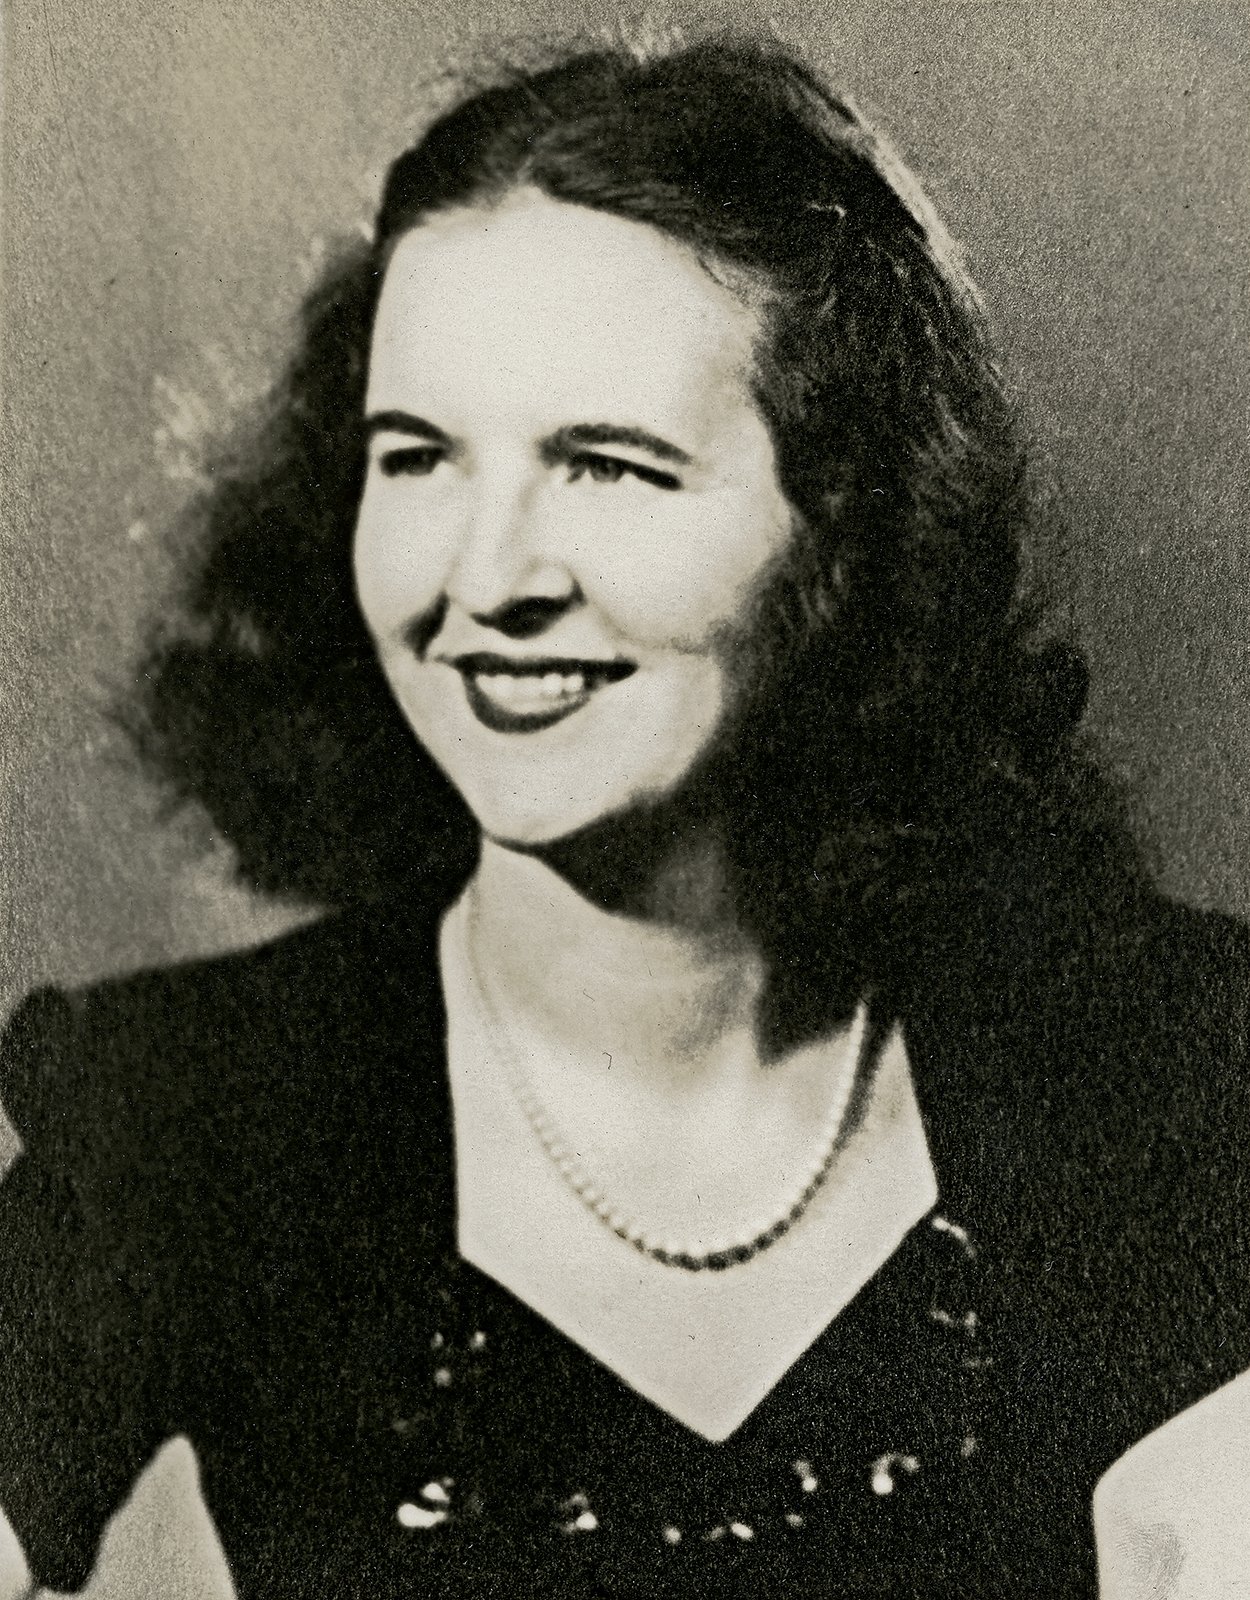 Alice’s mother, Mildred, around 1944.